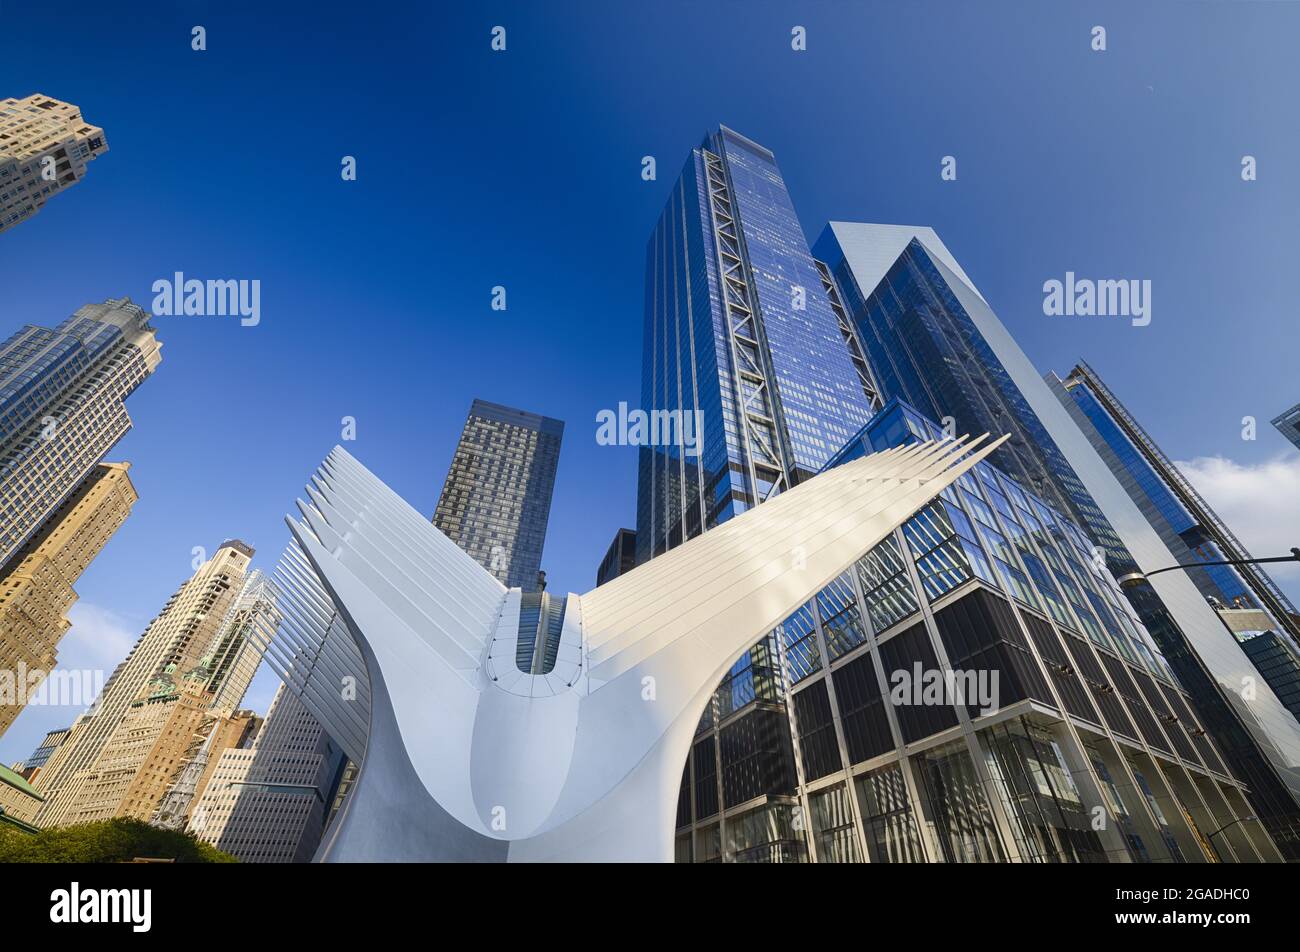 Vue à angle bas du Oculus World Trade Center, Man hattan, New York City, États-Unis Banque D'Images